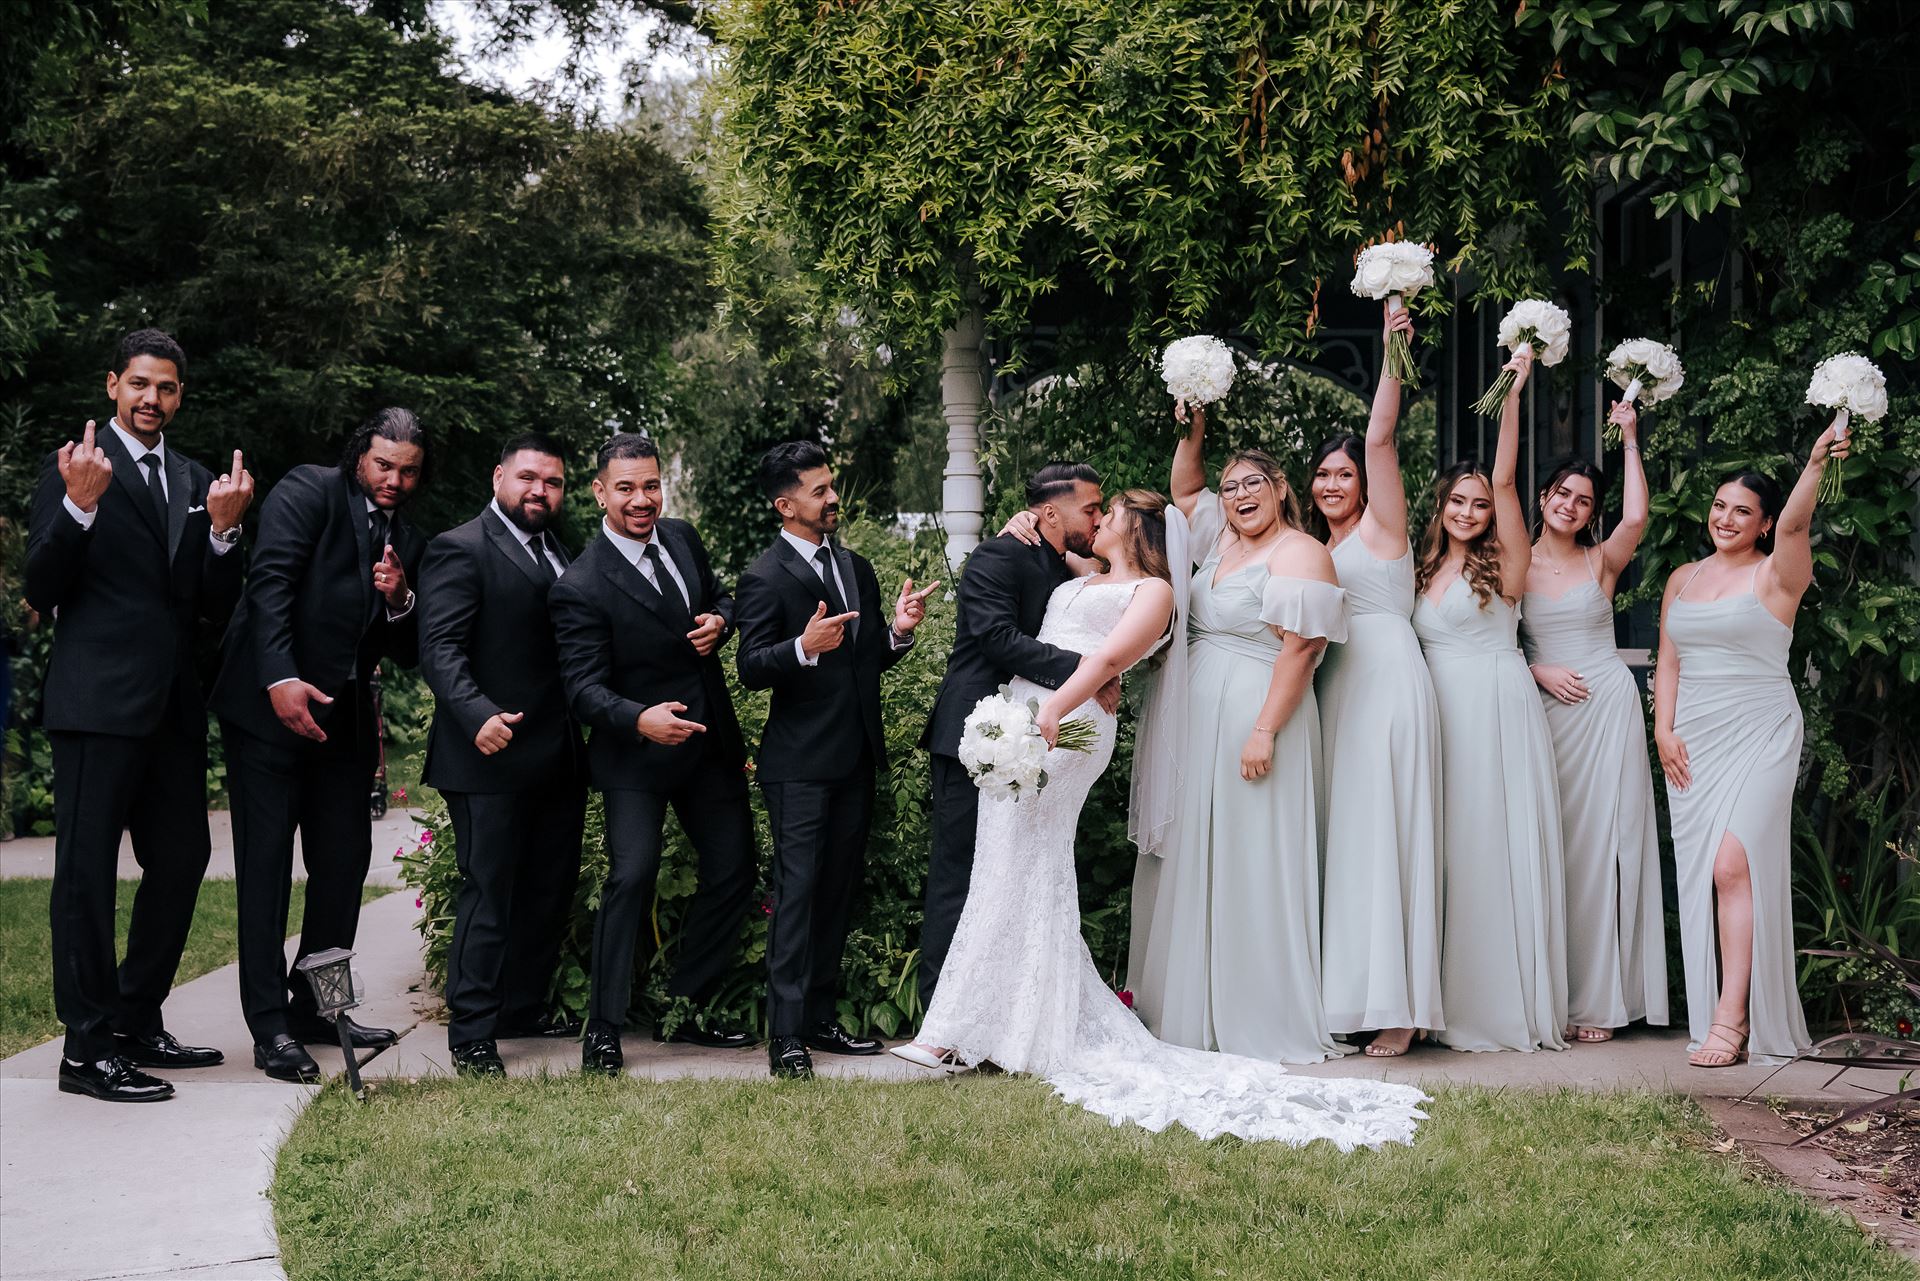 Final-2098.JPG Mirror's Edge Photography San Luis Obispo and Santa Barbara County Wedding Photographer. Kaleidoscope Inn and Gardens Wedding. Bridal Party Fun by Sarah Williams